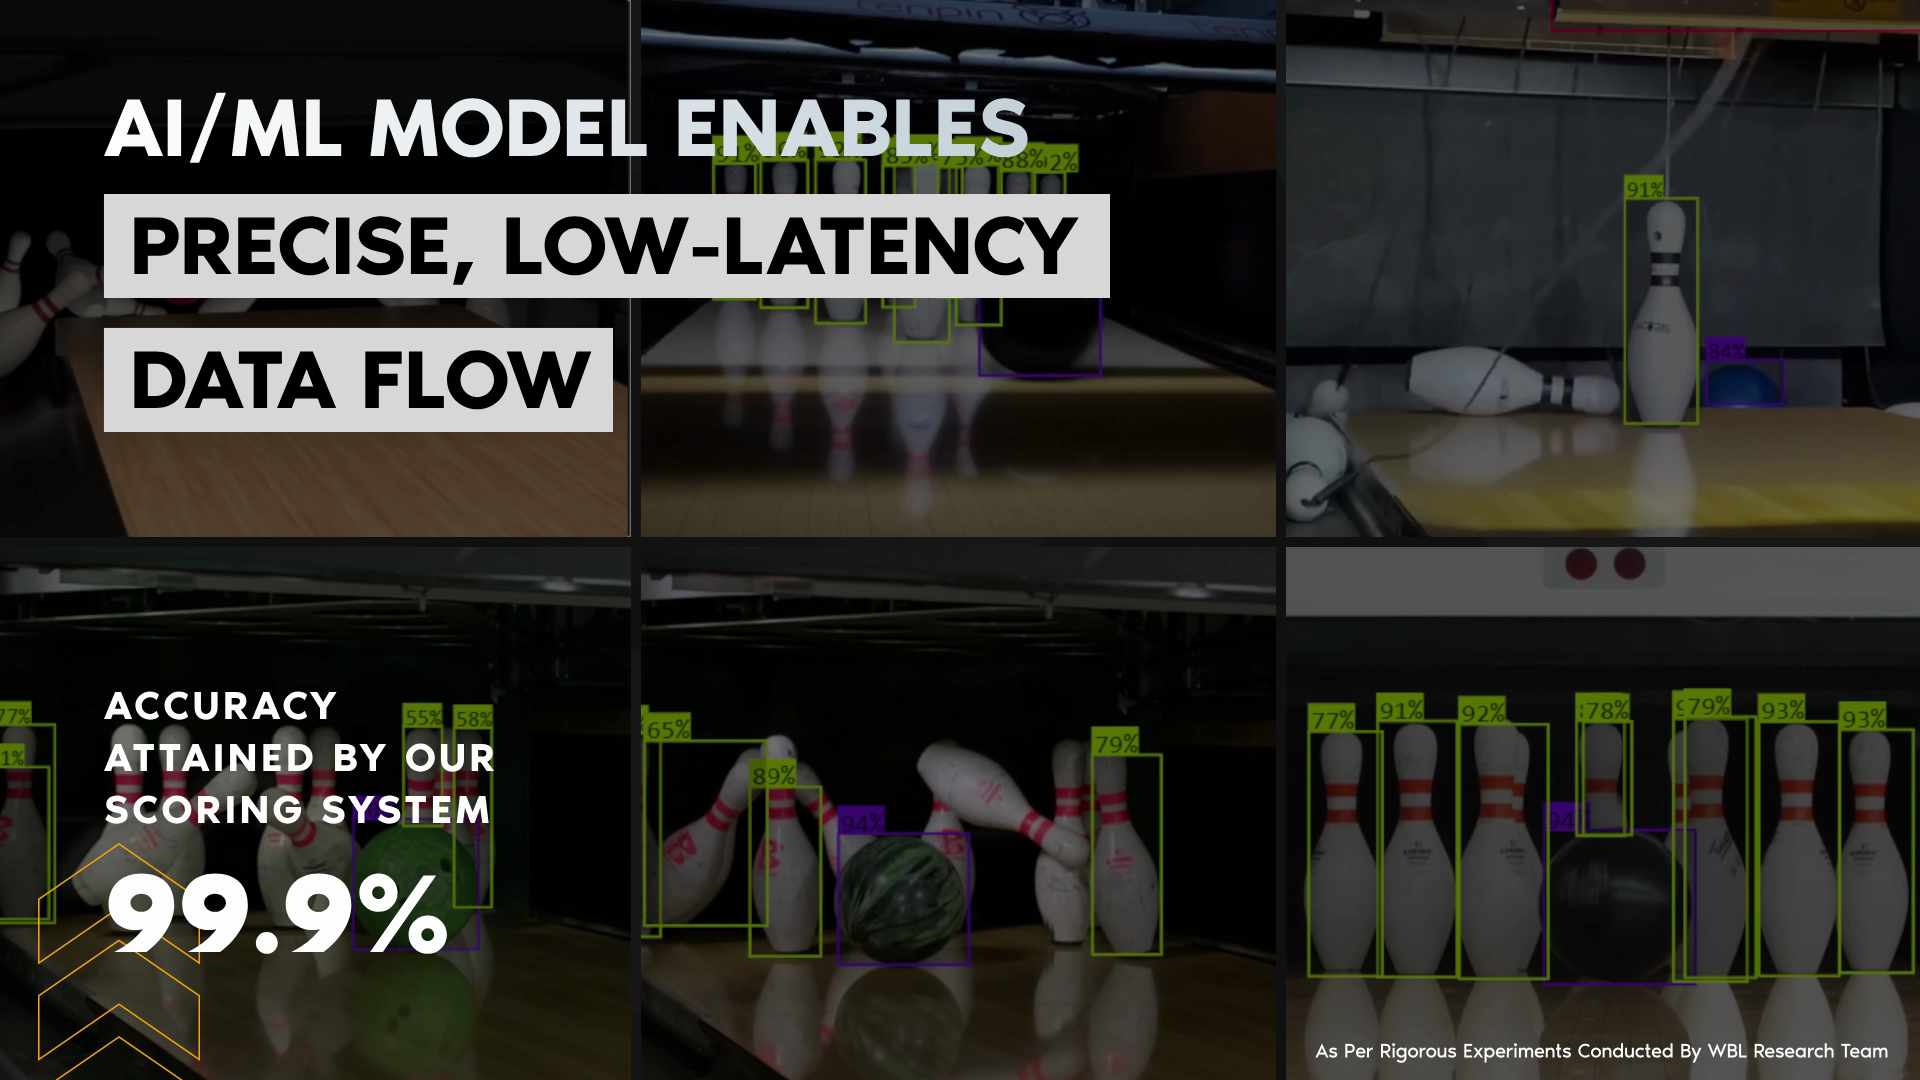 WBL's AI/ML Model Enables Precise, Low-Latency Data Flow